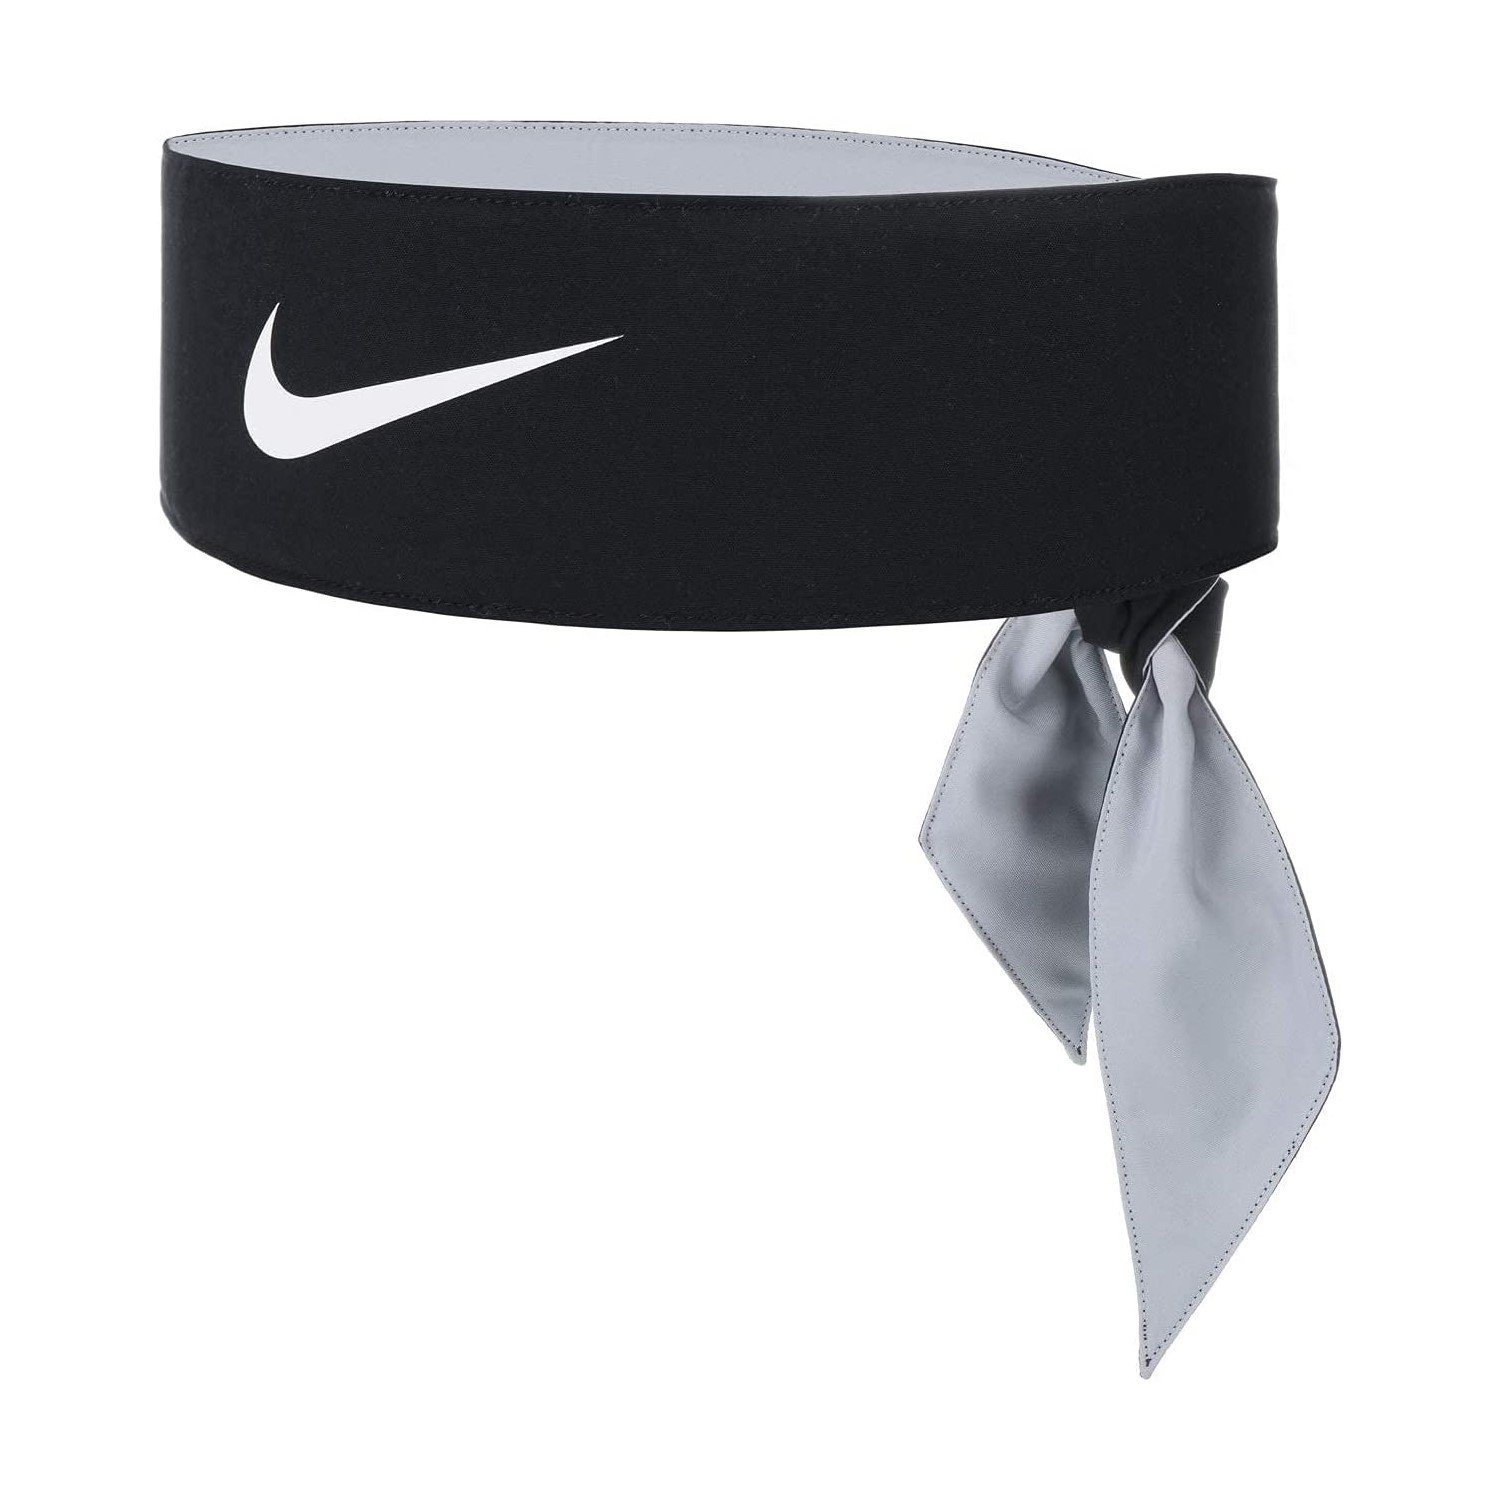 Tenisová čelenka Nike U - čierna/biela